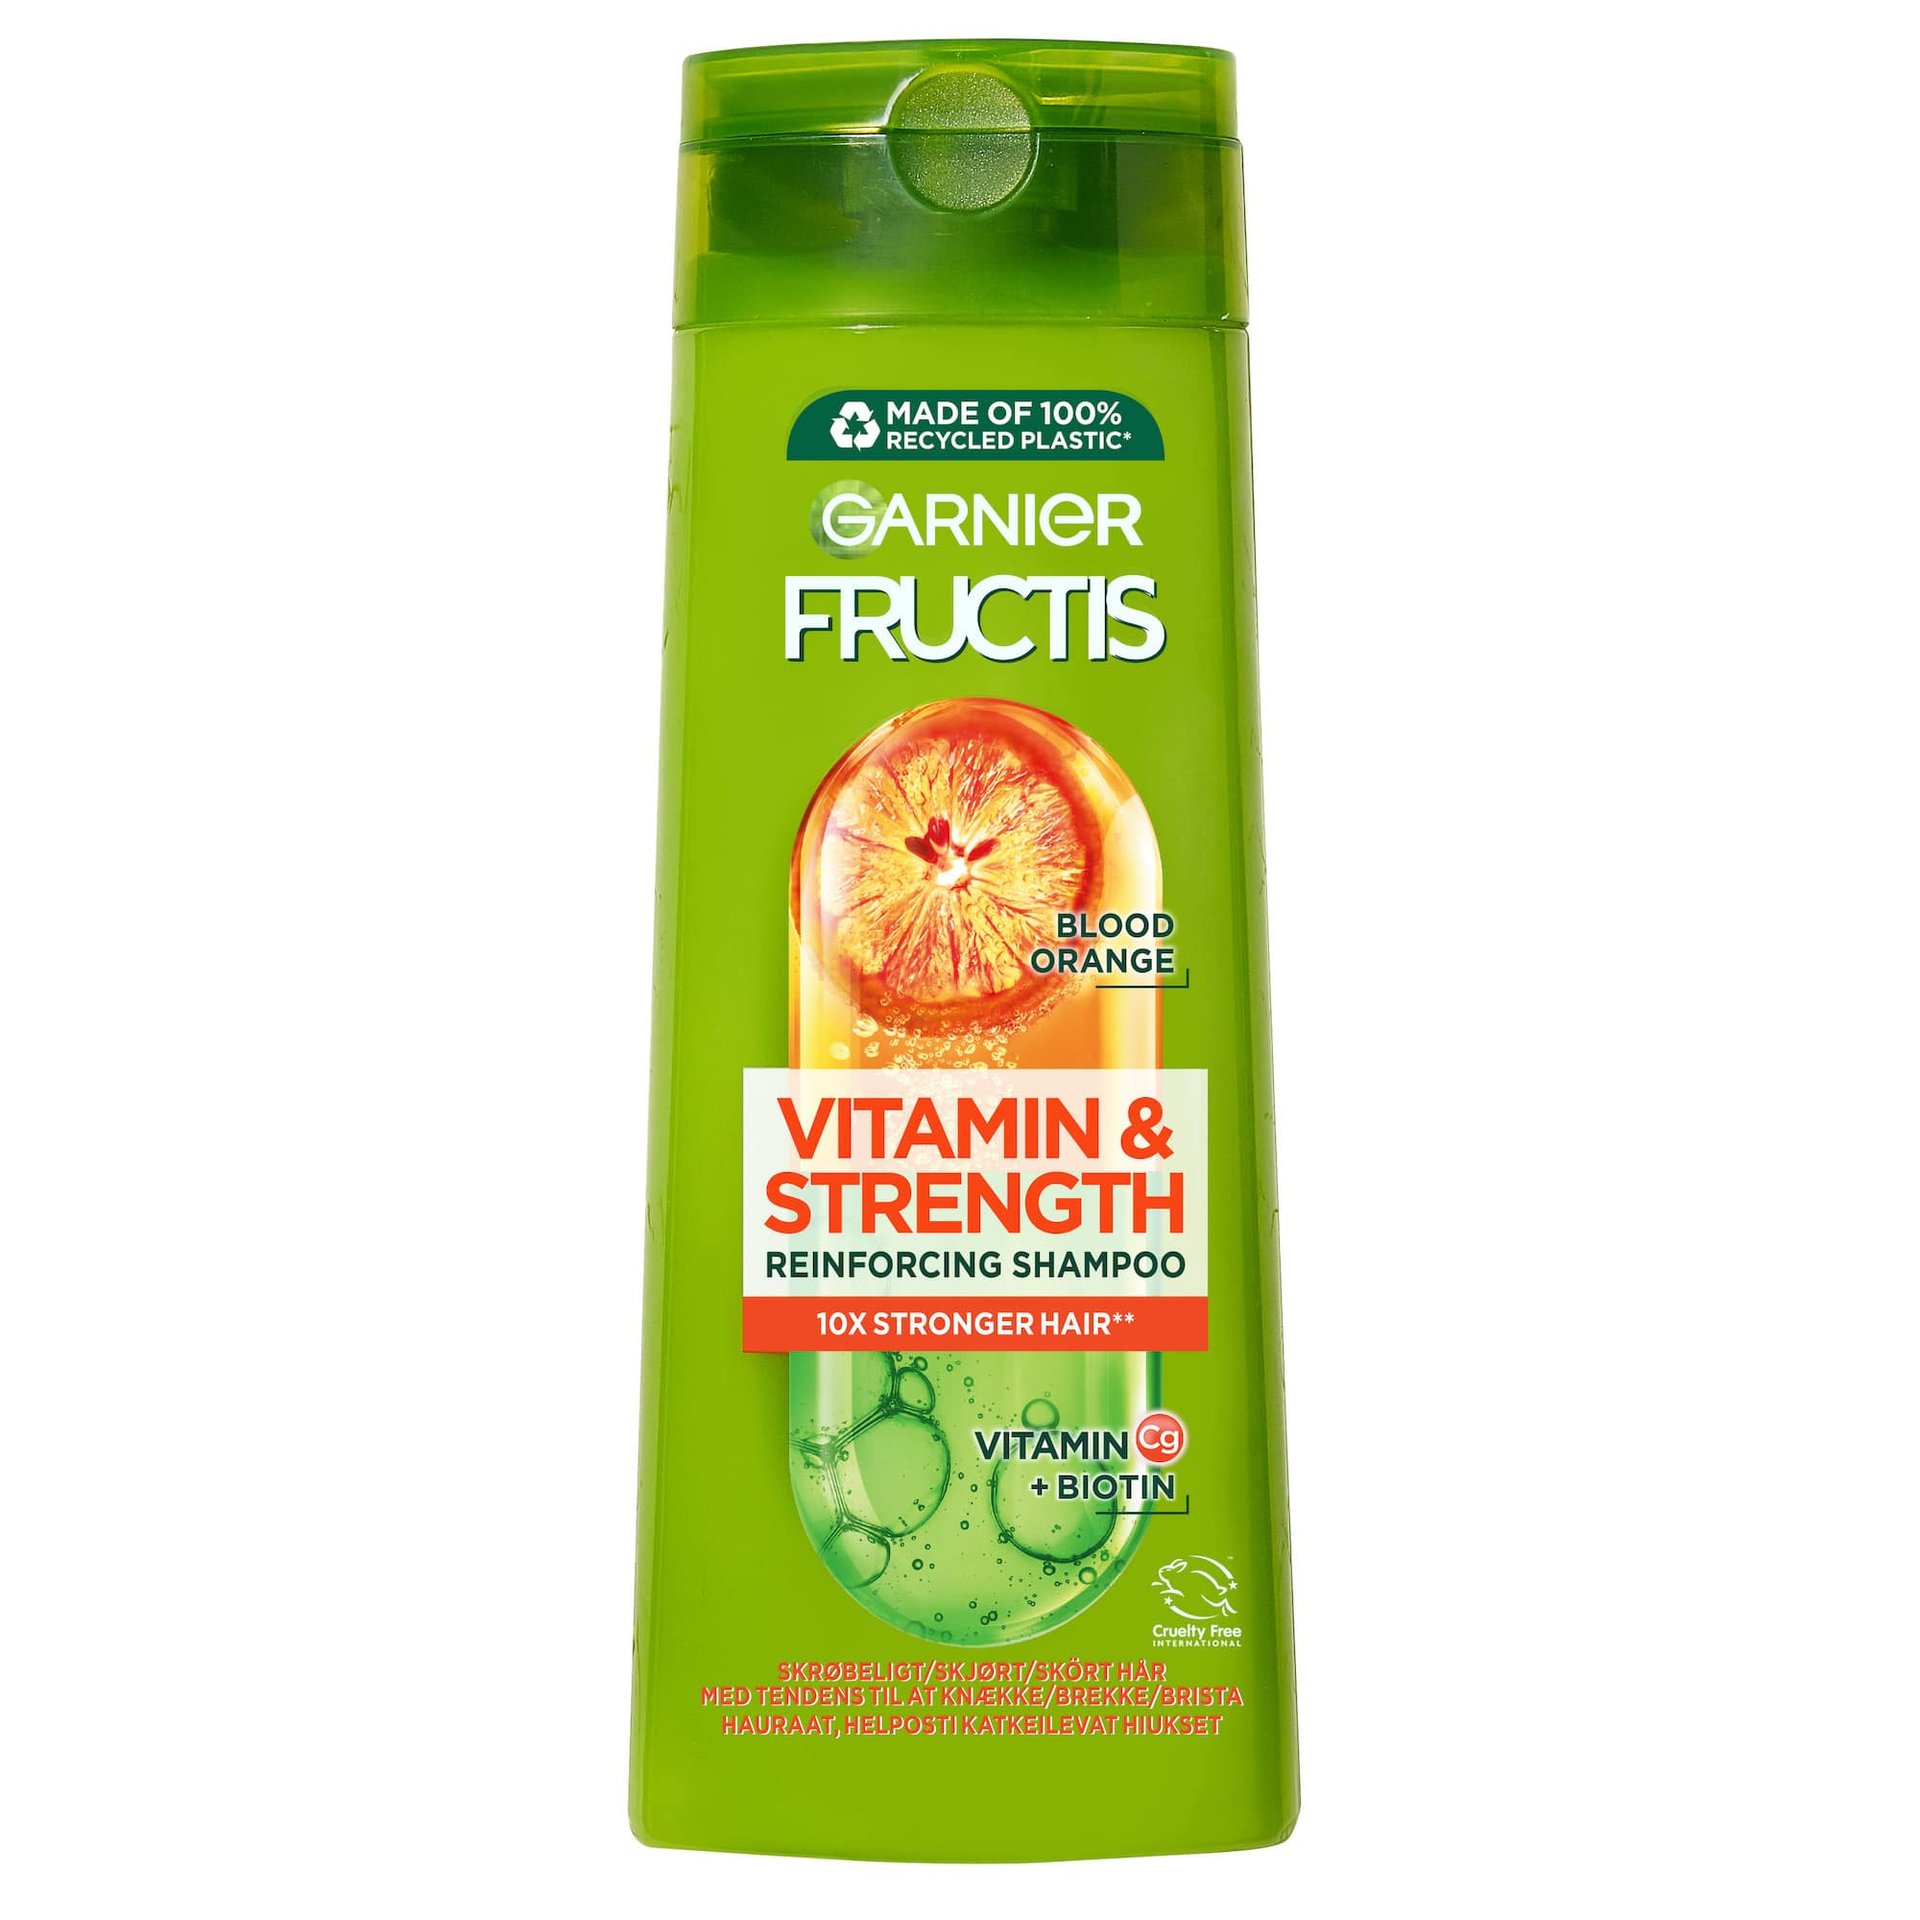 Mini_Resized_Garnier_Fructis_Vitamin&Strenght_Shampoo-min